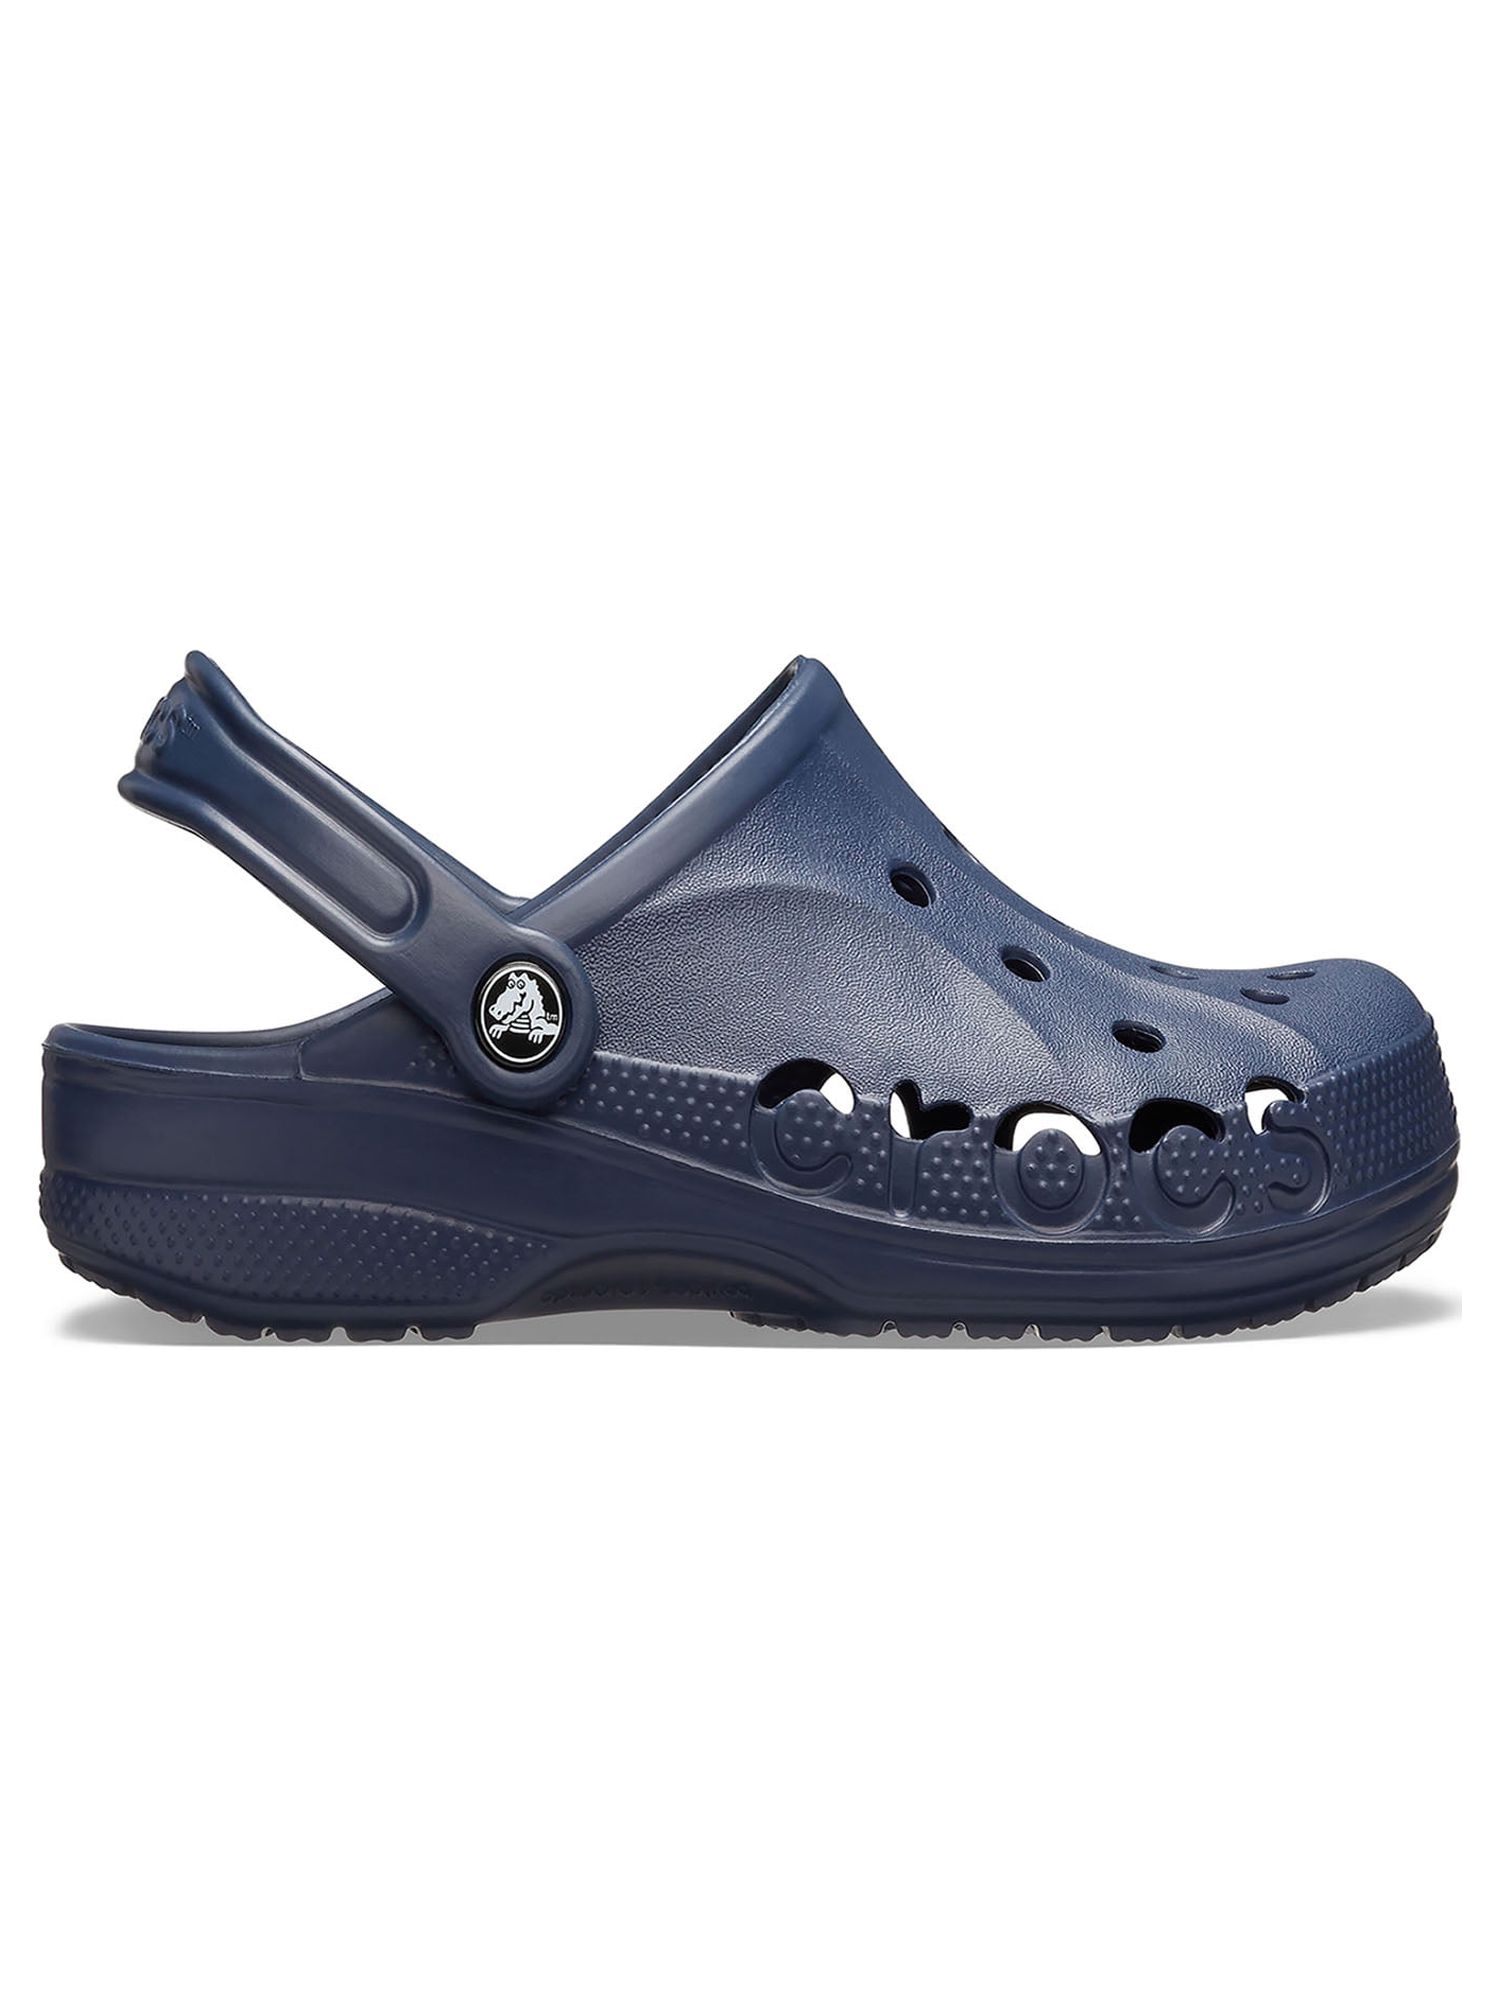 Crocs Men's and Women's Unisex Baya Clog Sandals - image 3 of 6